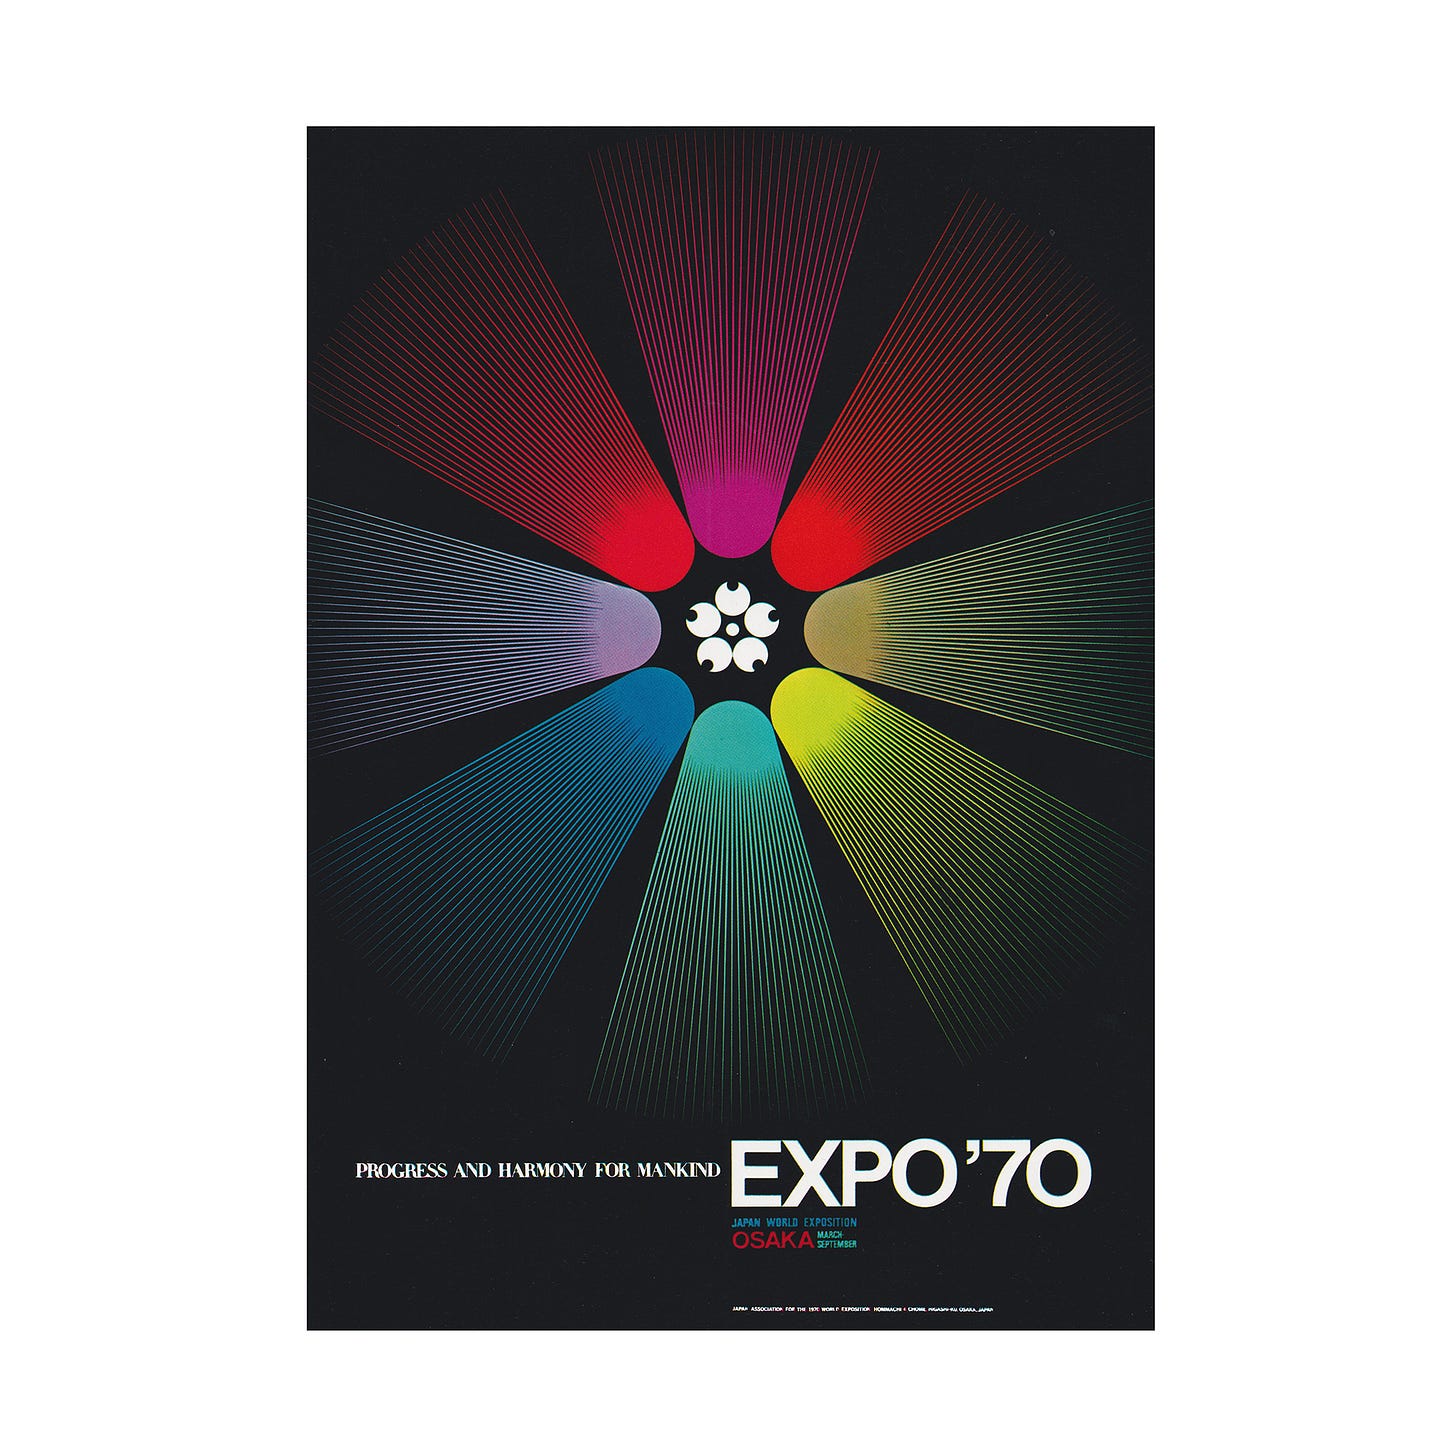 Yusaku Kamekura's poster for Expo 70 featuring Takeshi Otaka's logo design